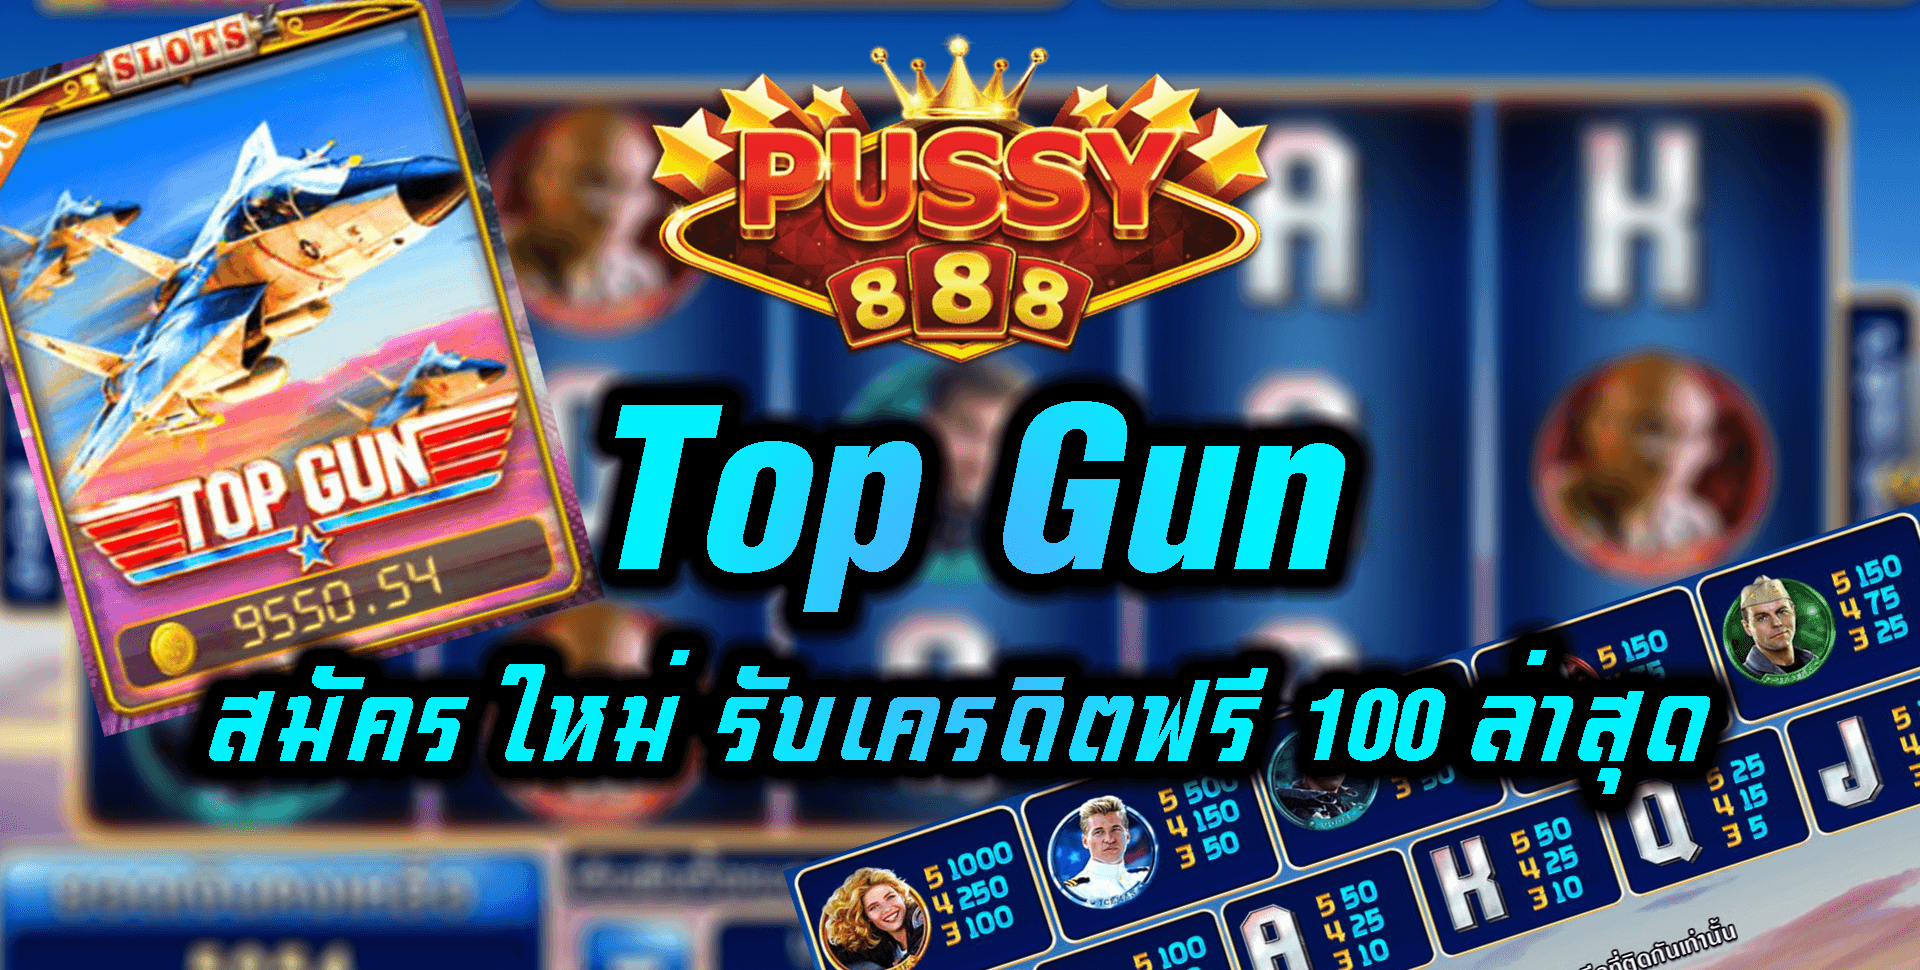 Pussy888-Top Gun-5